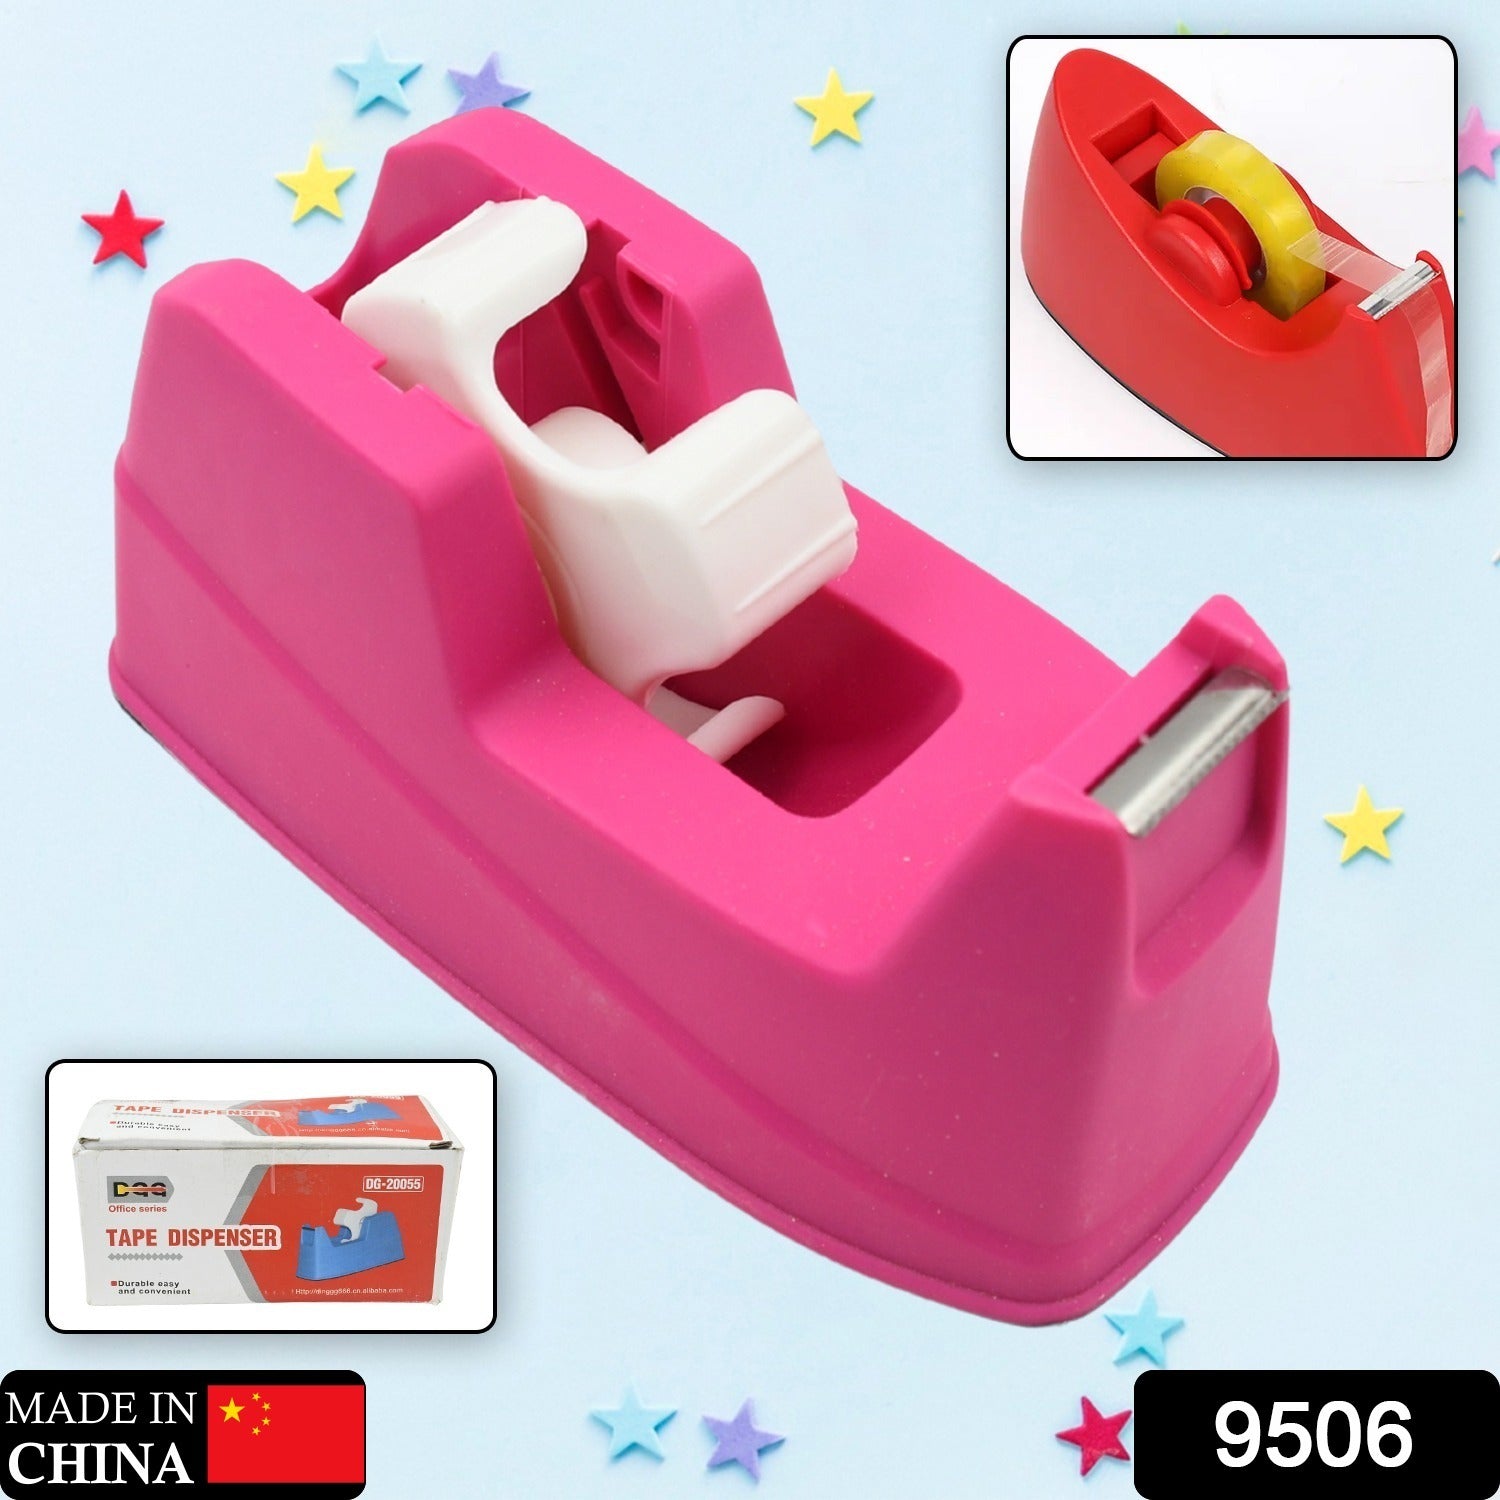 9506 Plastic Tape Dispenser Cutter for Home Office use, Tape Dispenser for Stationary, Tape Cutter Packaging Tape (1 pc / 631 Gm)